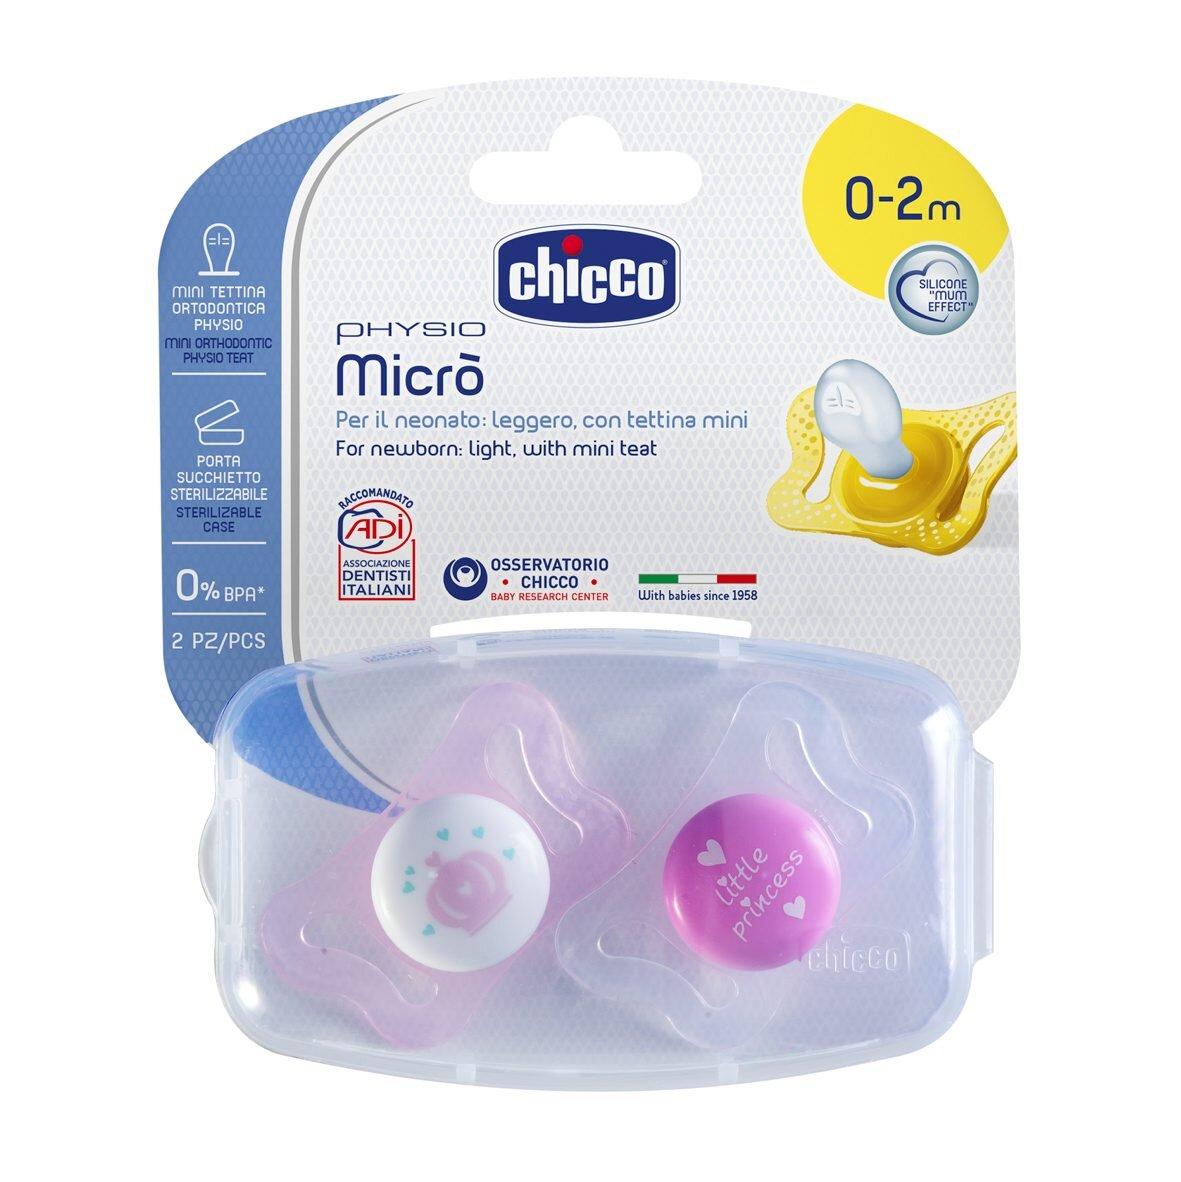 Chicco Physio Micro